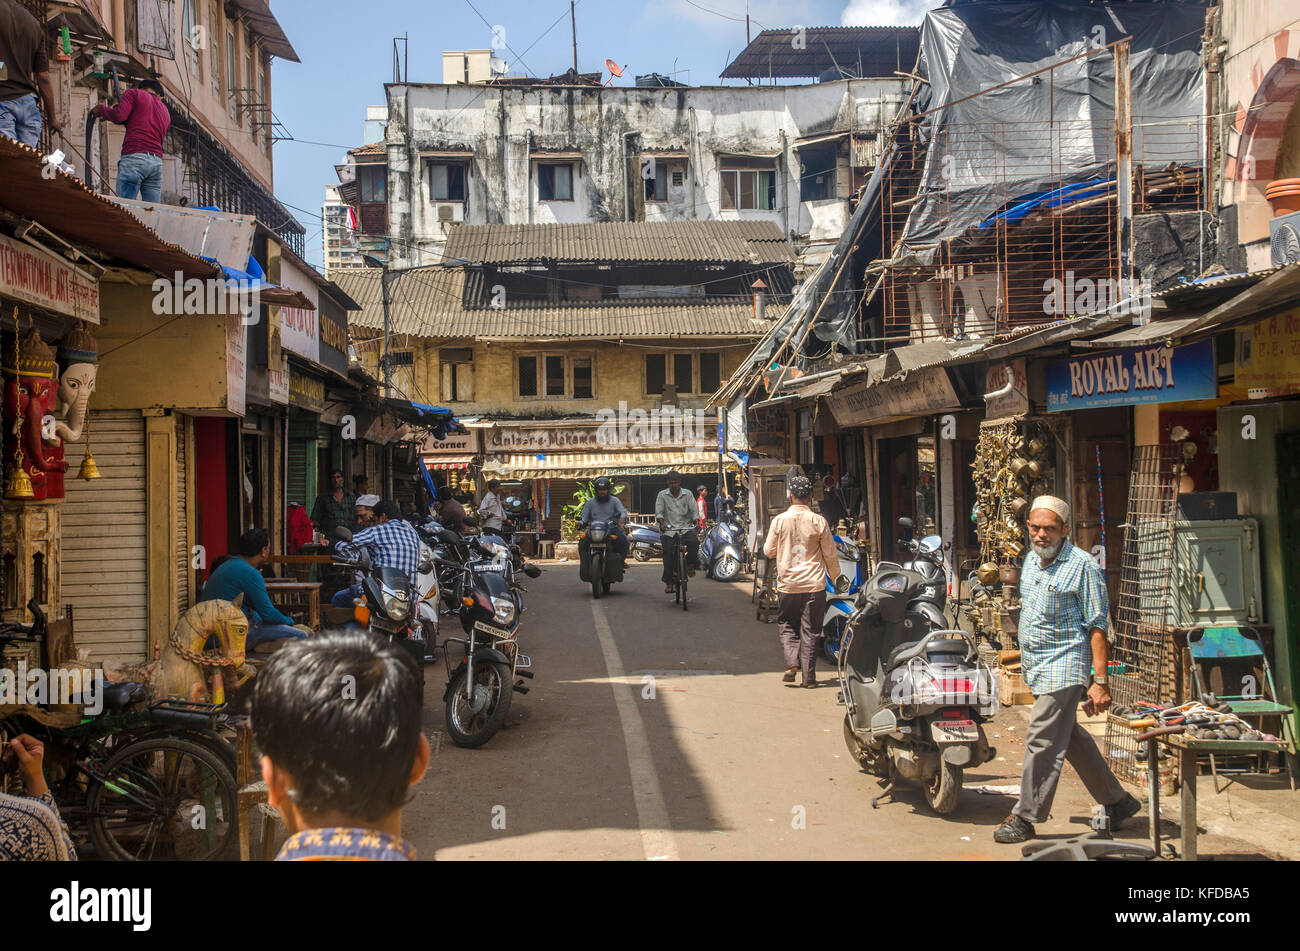 Busy street at Chor bazaar, Mumbai, India Stock Photo